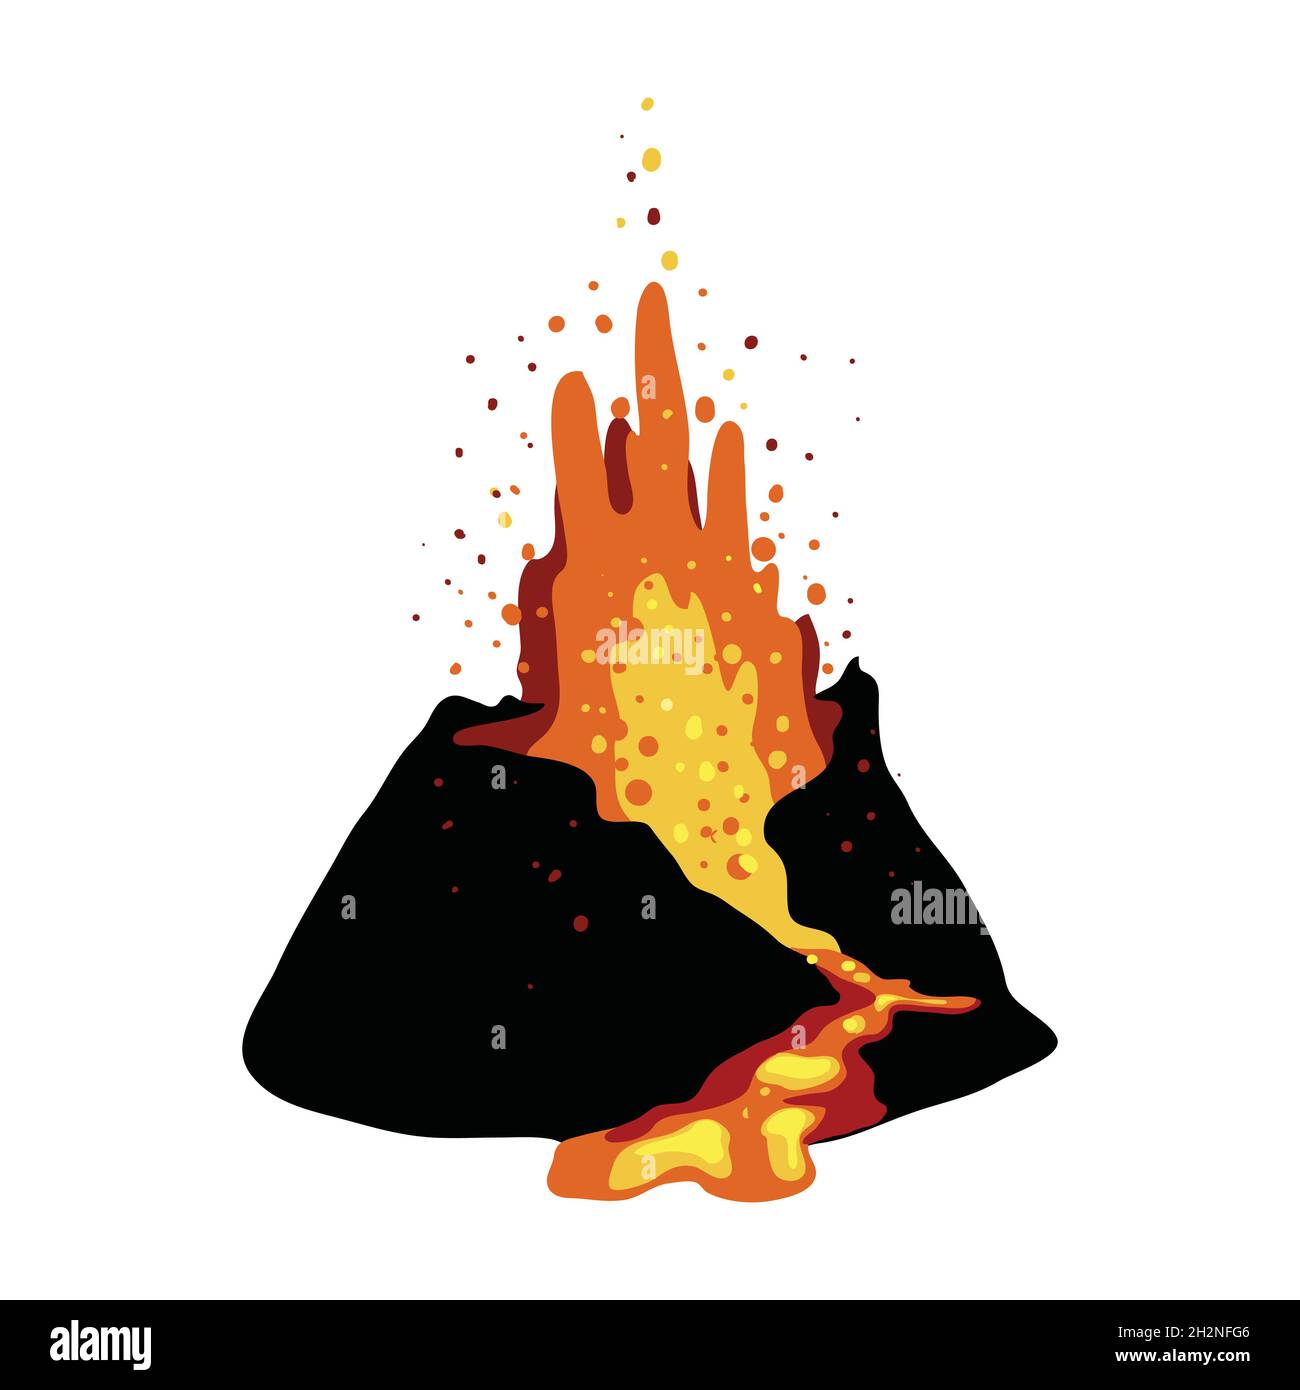 Volcano eruption illustration Stock Vector